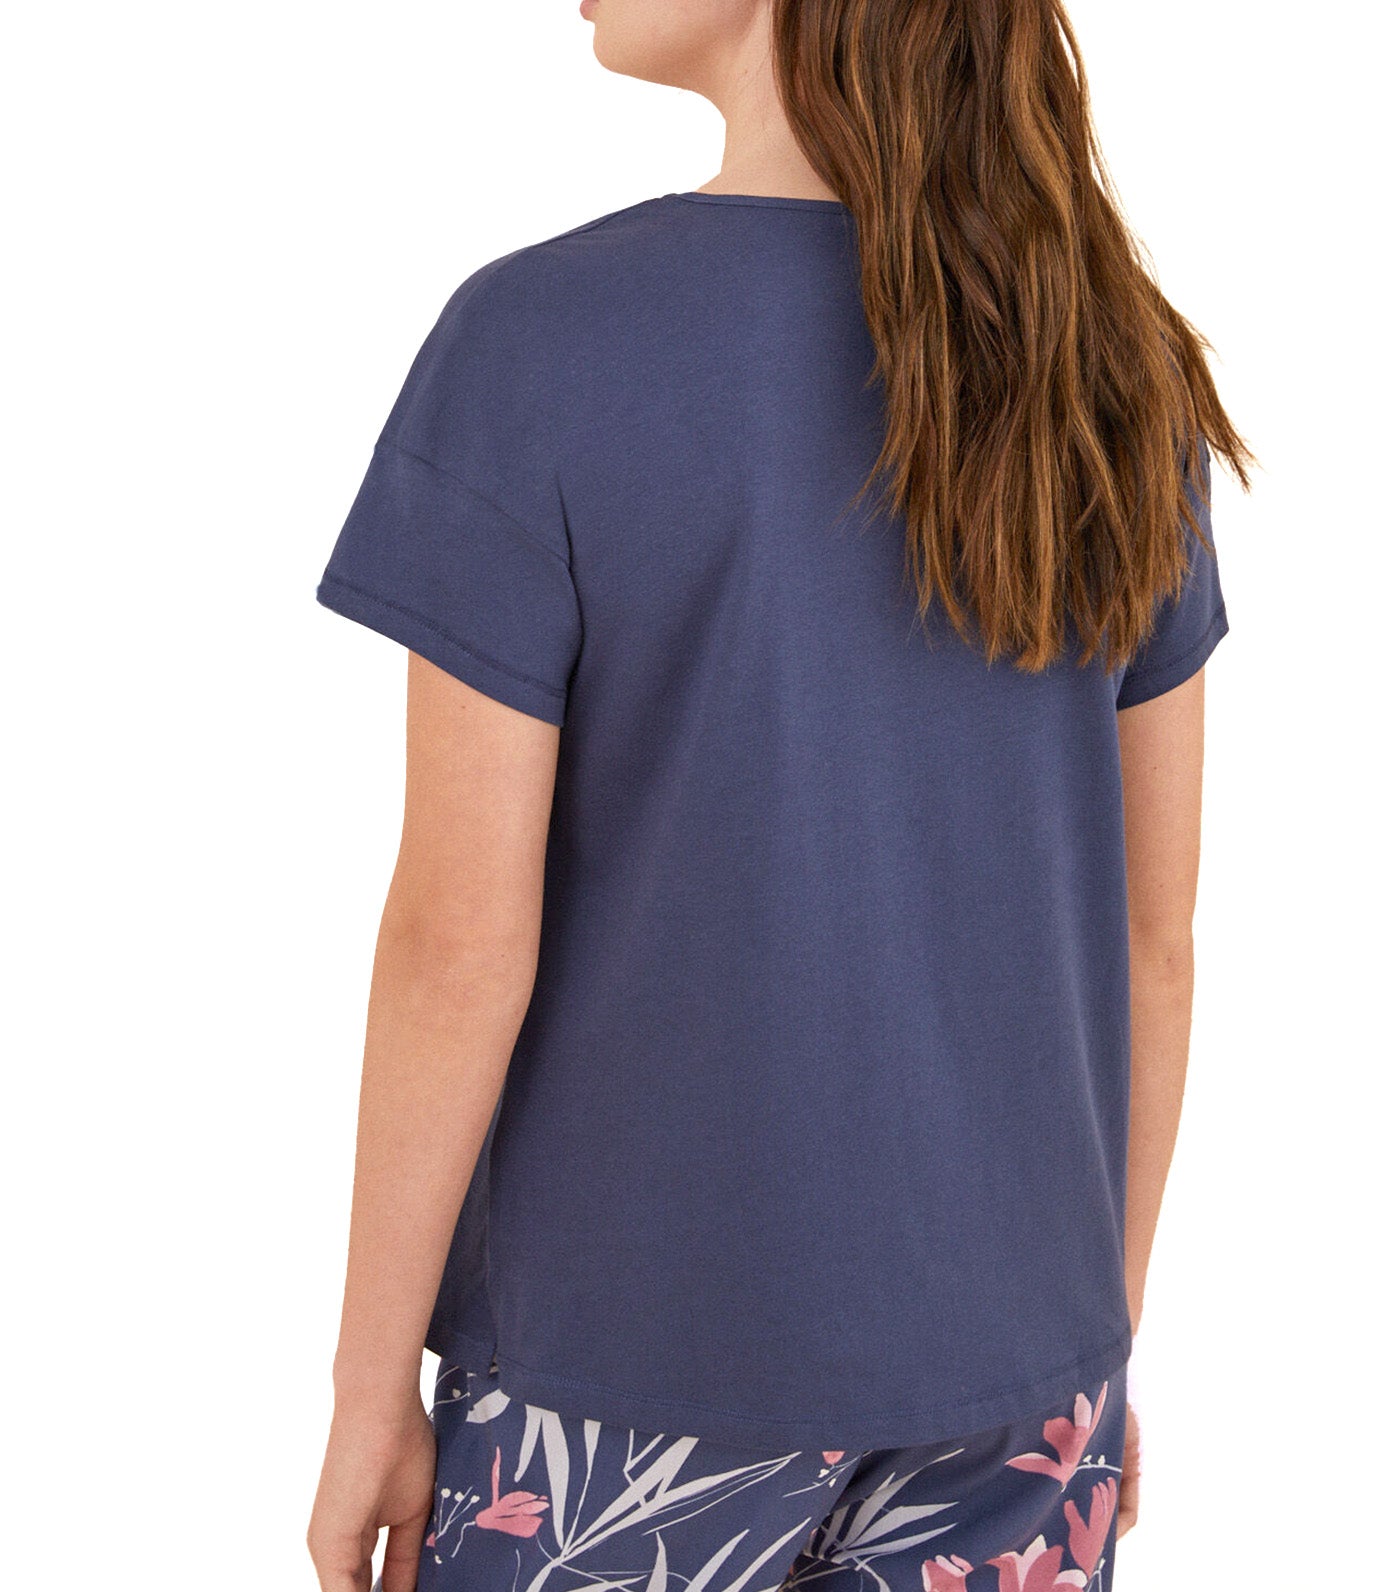 100% Cotton Navy Blue Lace Short Sleeve T-Shirt